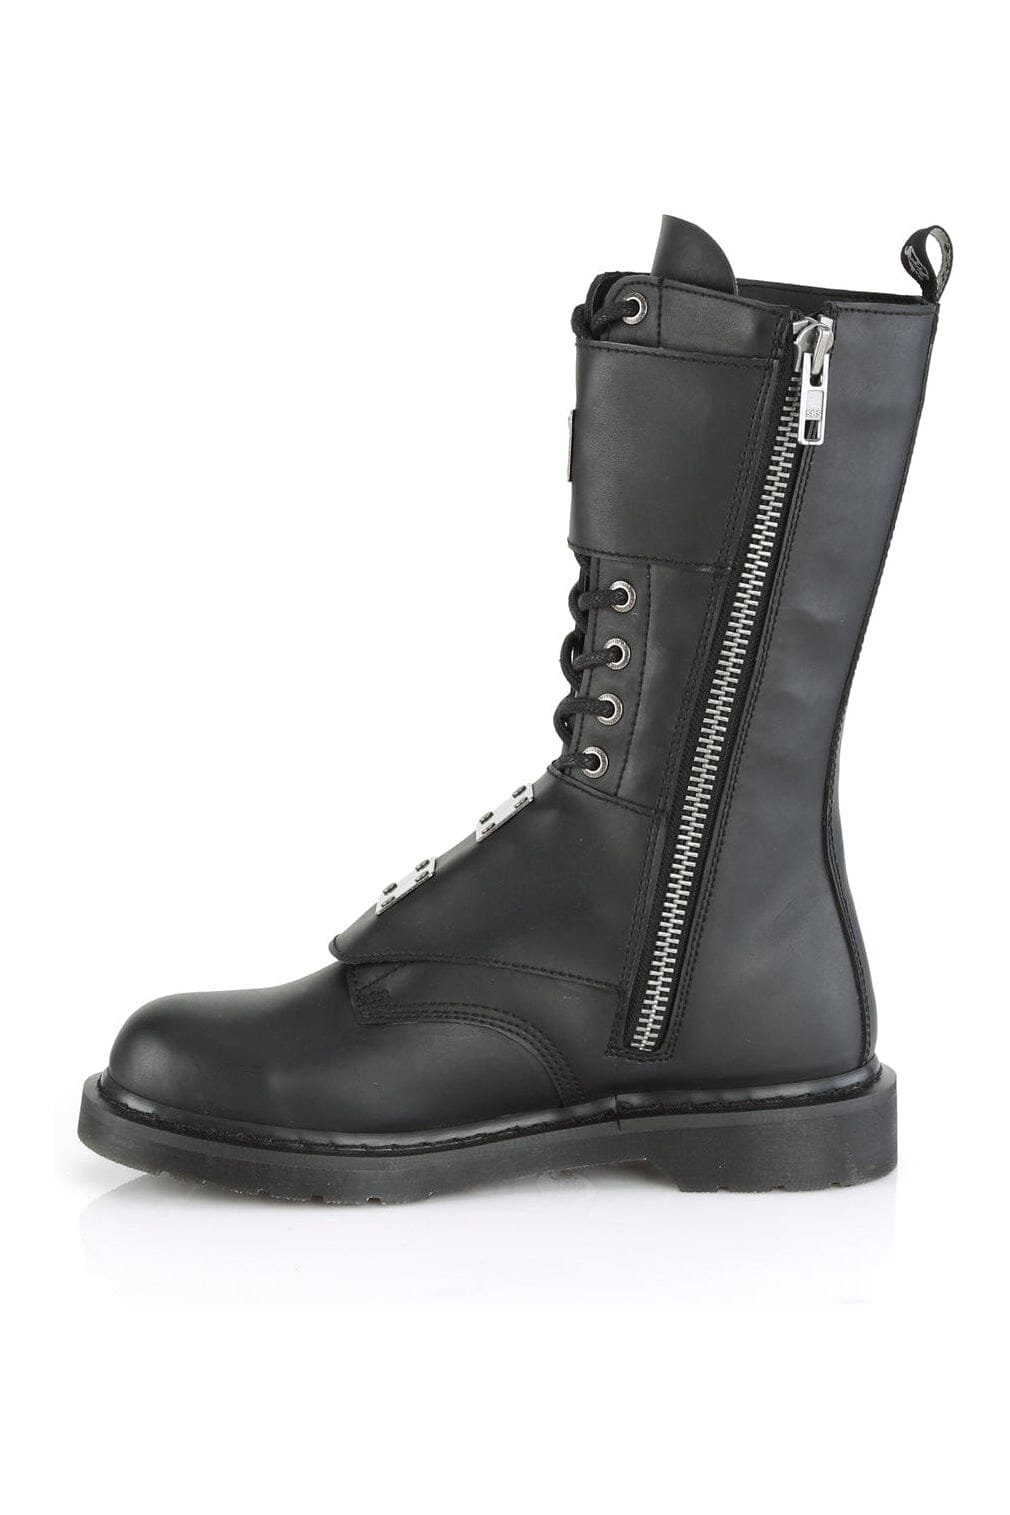 BOLT-345 Black Vegan Leather Knee Boot-Knee Boots-Demonia-SEXYSHOES.COM